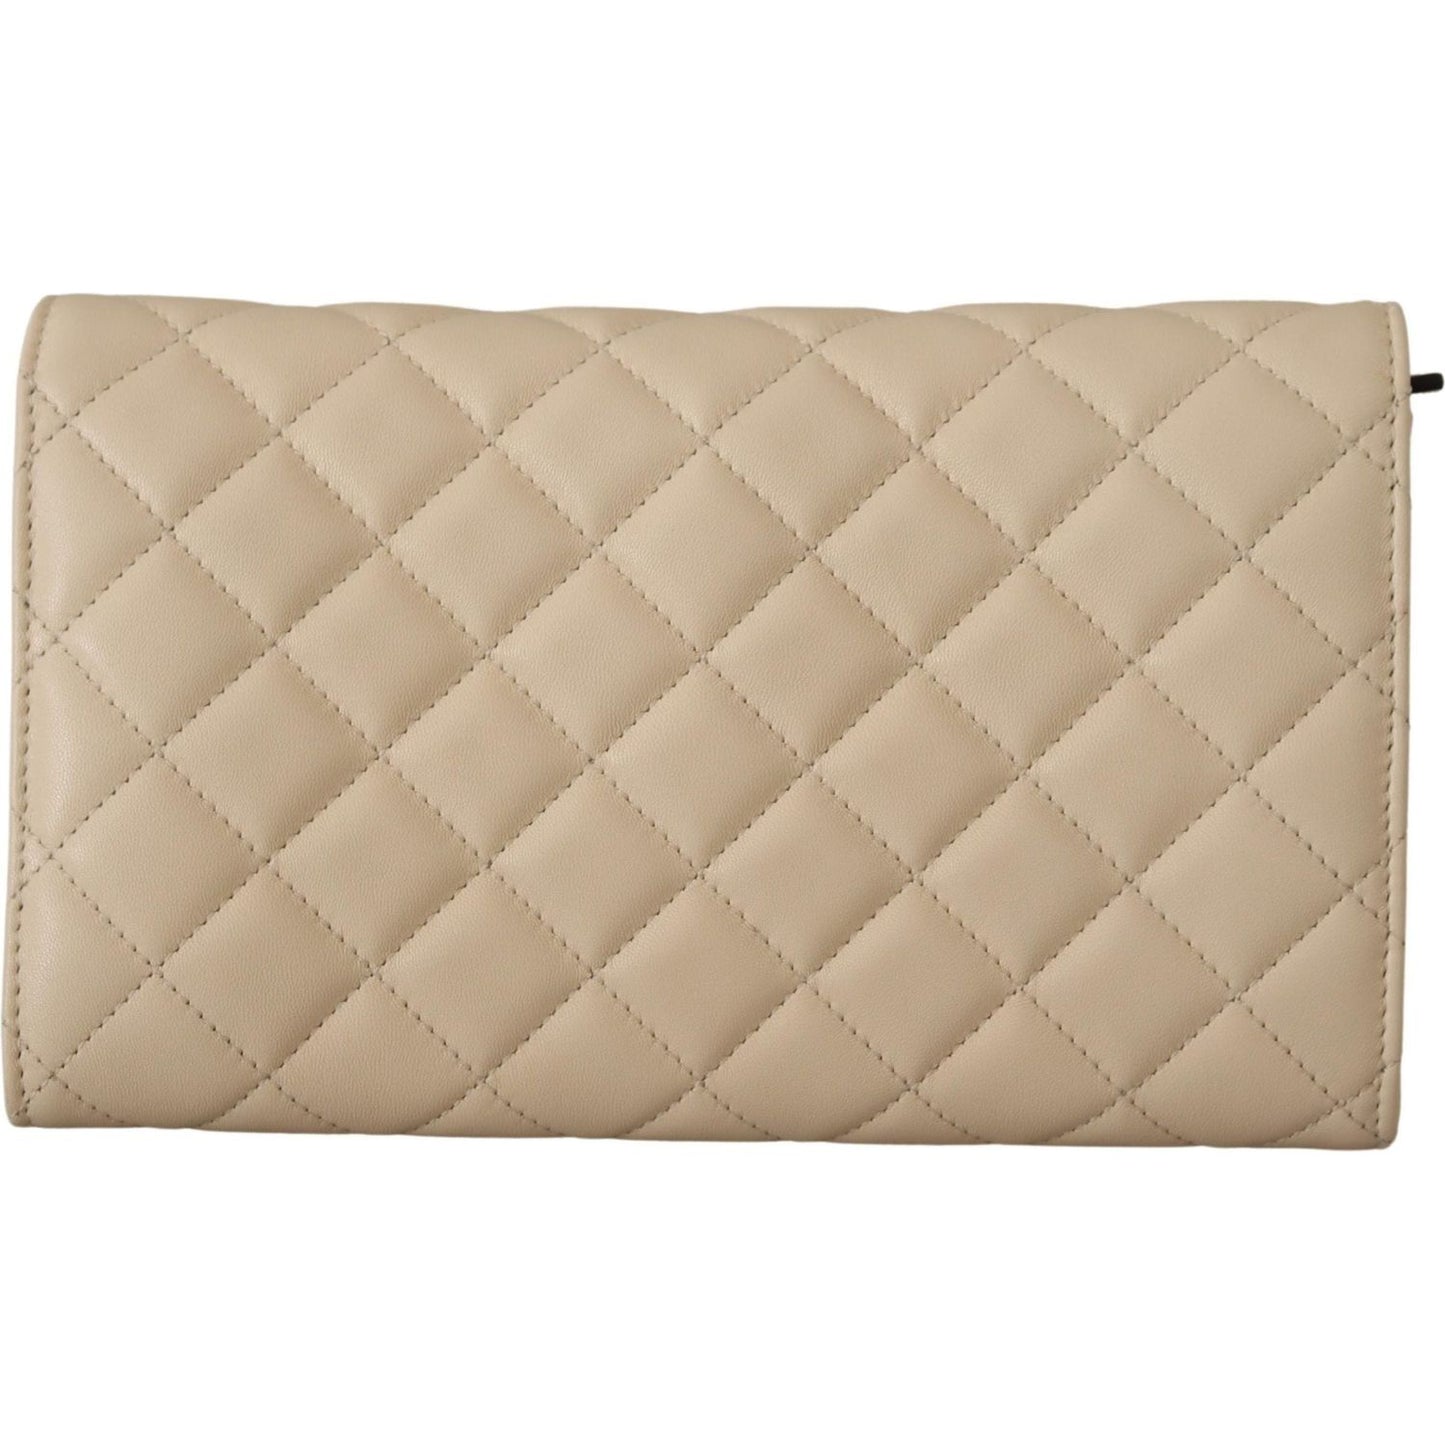 Versace Elegant White Nappa Leather Evening Shoulder Bag white-nappa-leather-medusa-evening-bag